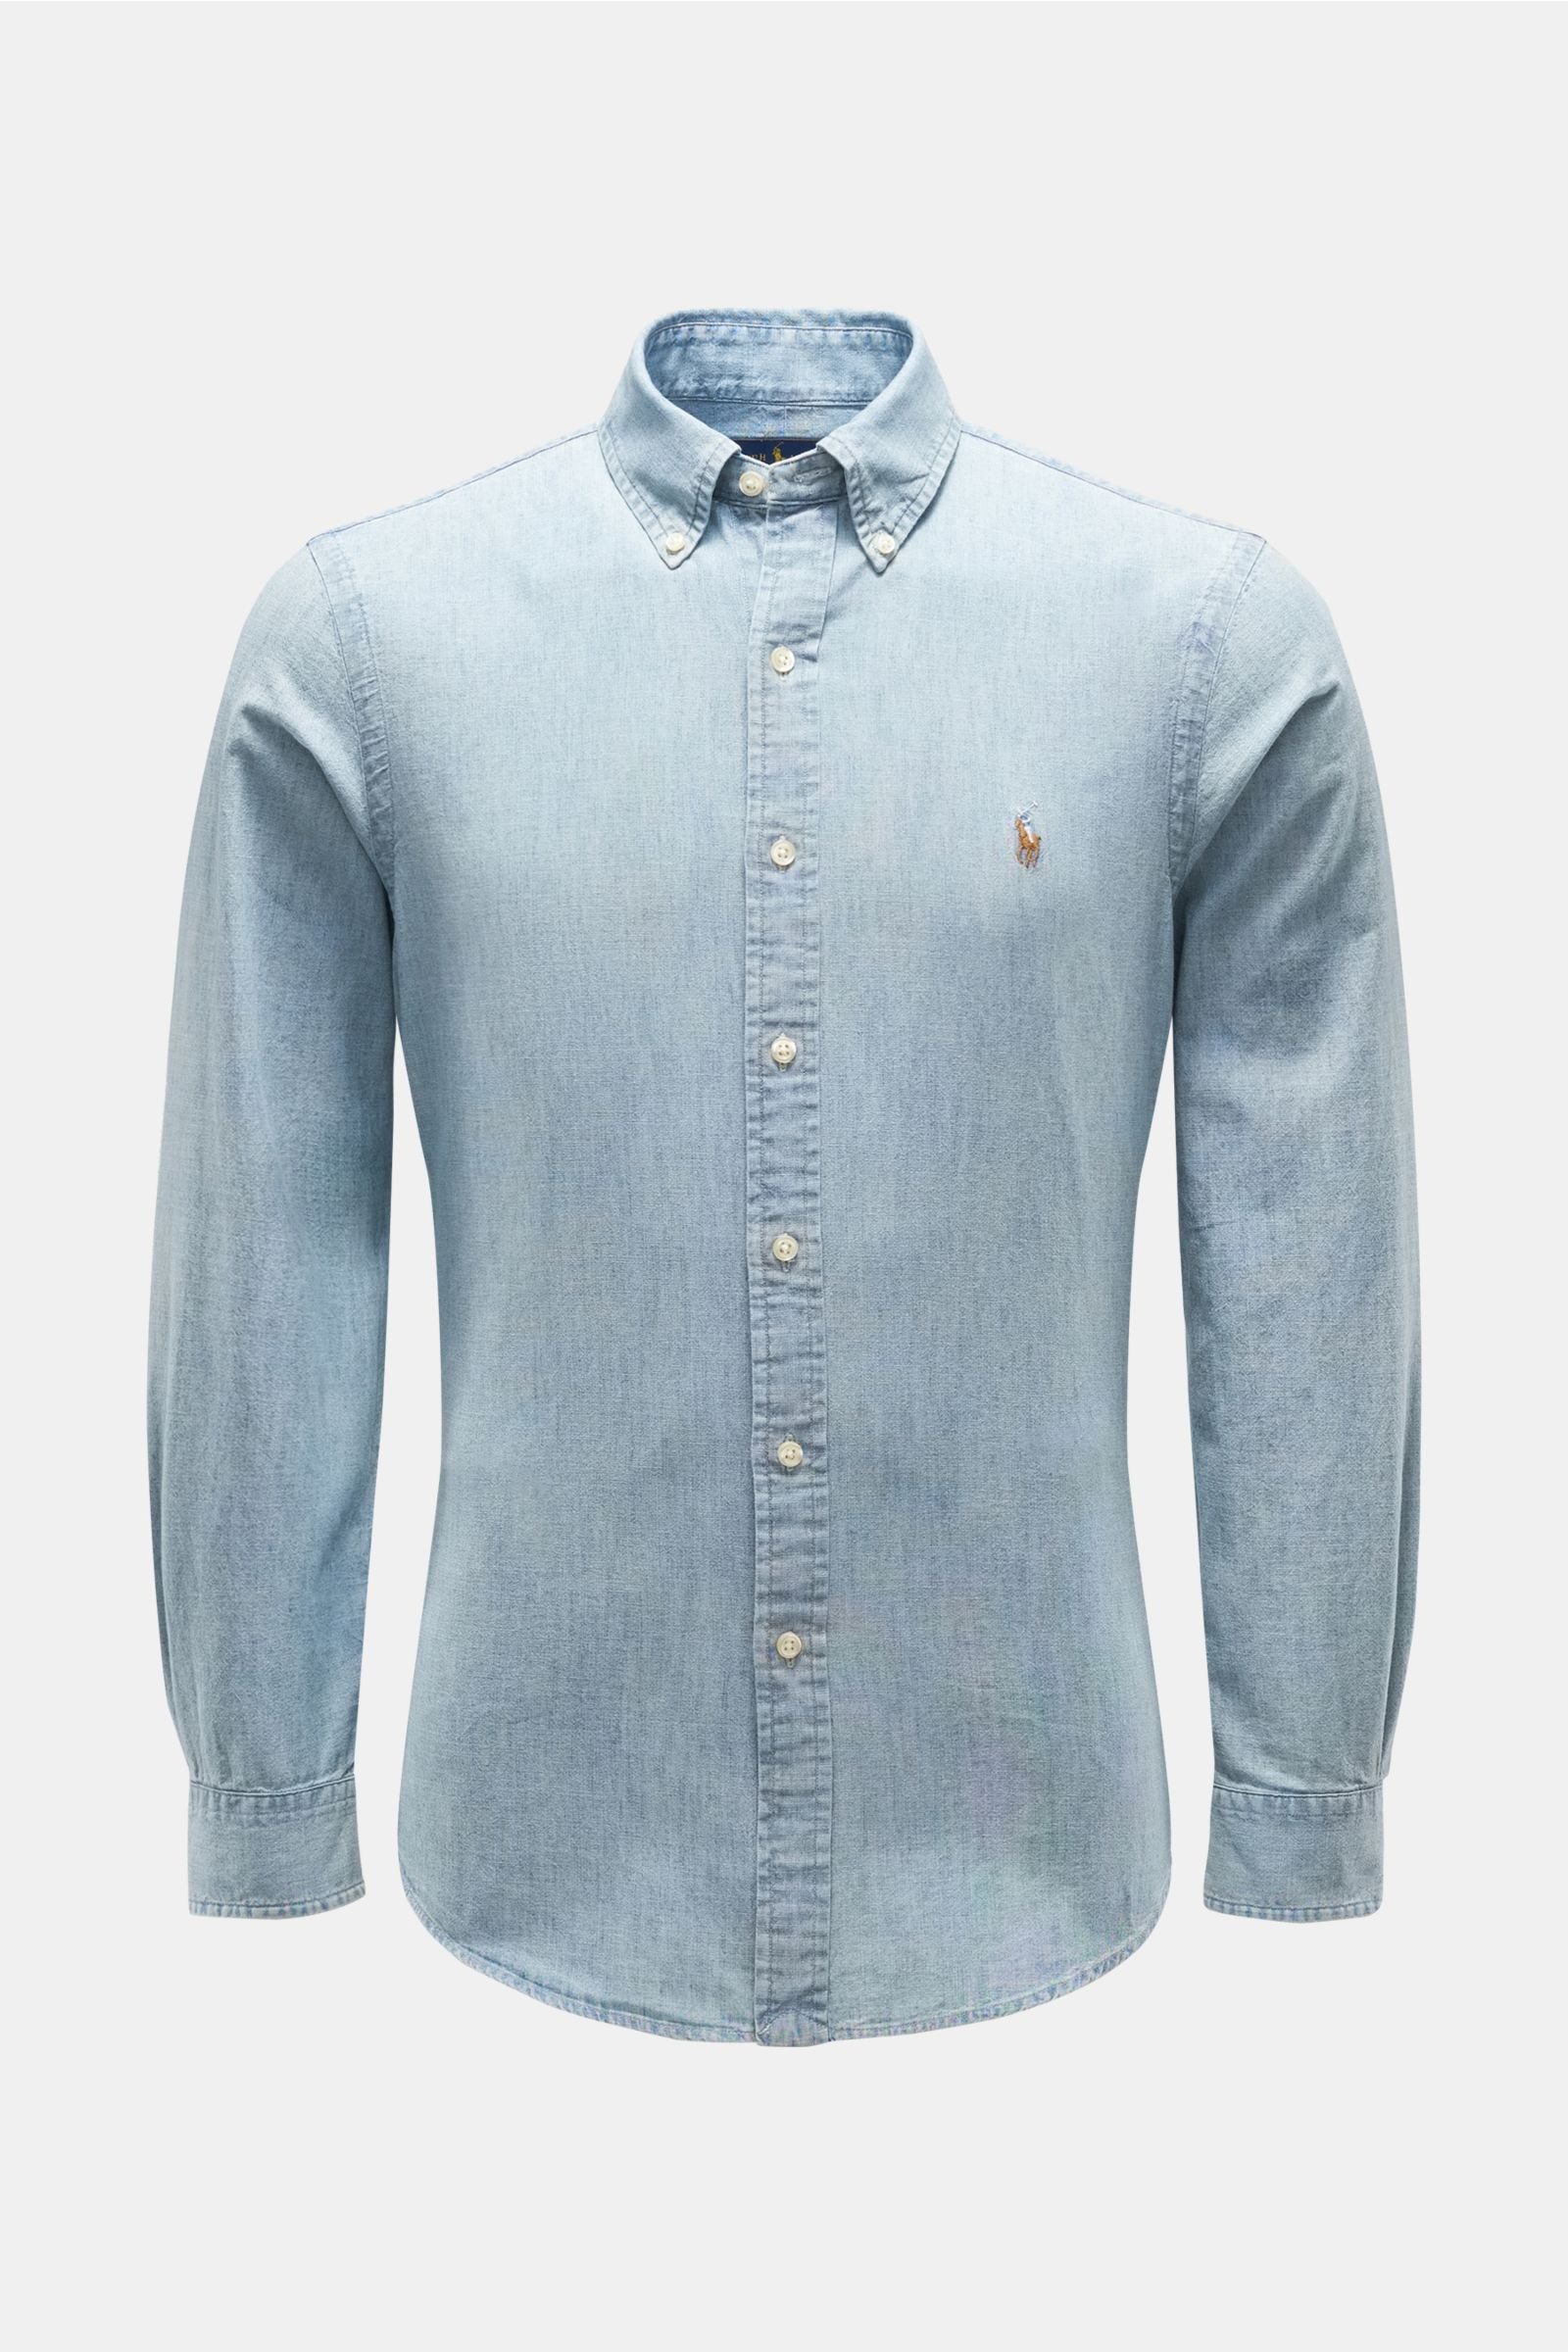 Chambray shirt button-down collar light blue